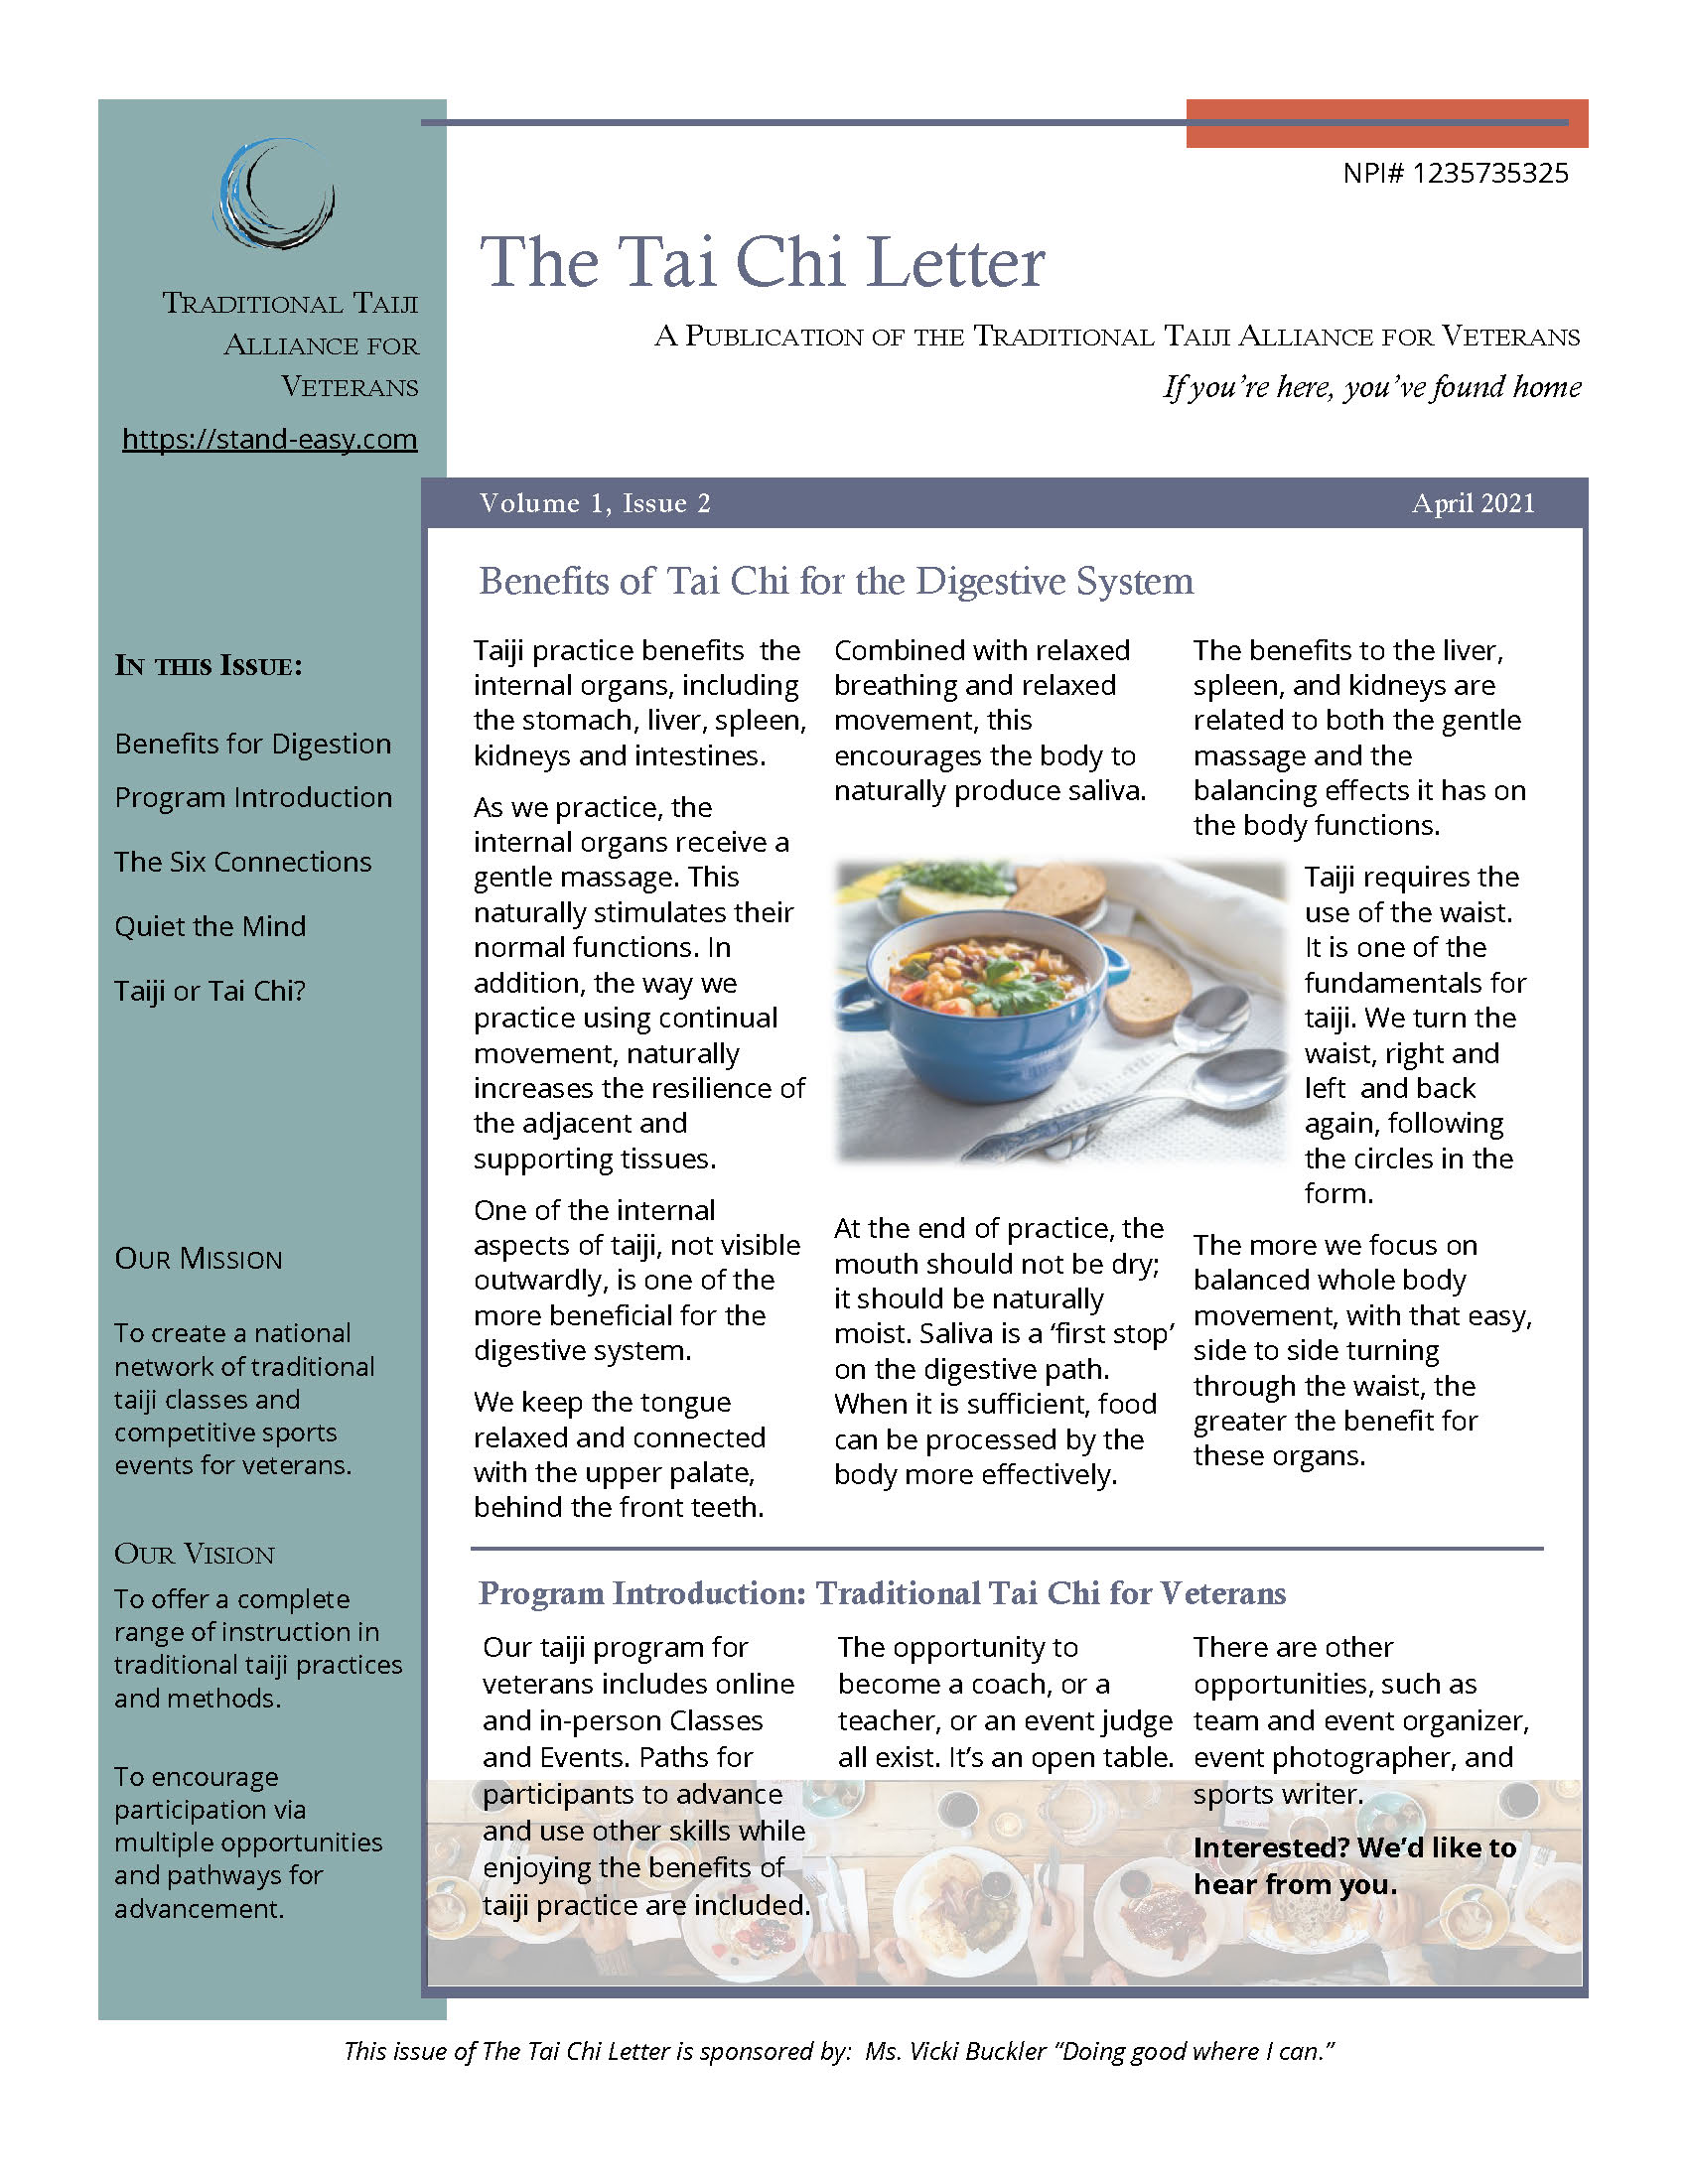 The Tai Chi Letter April 2021